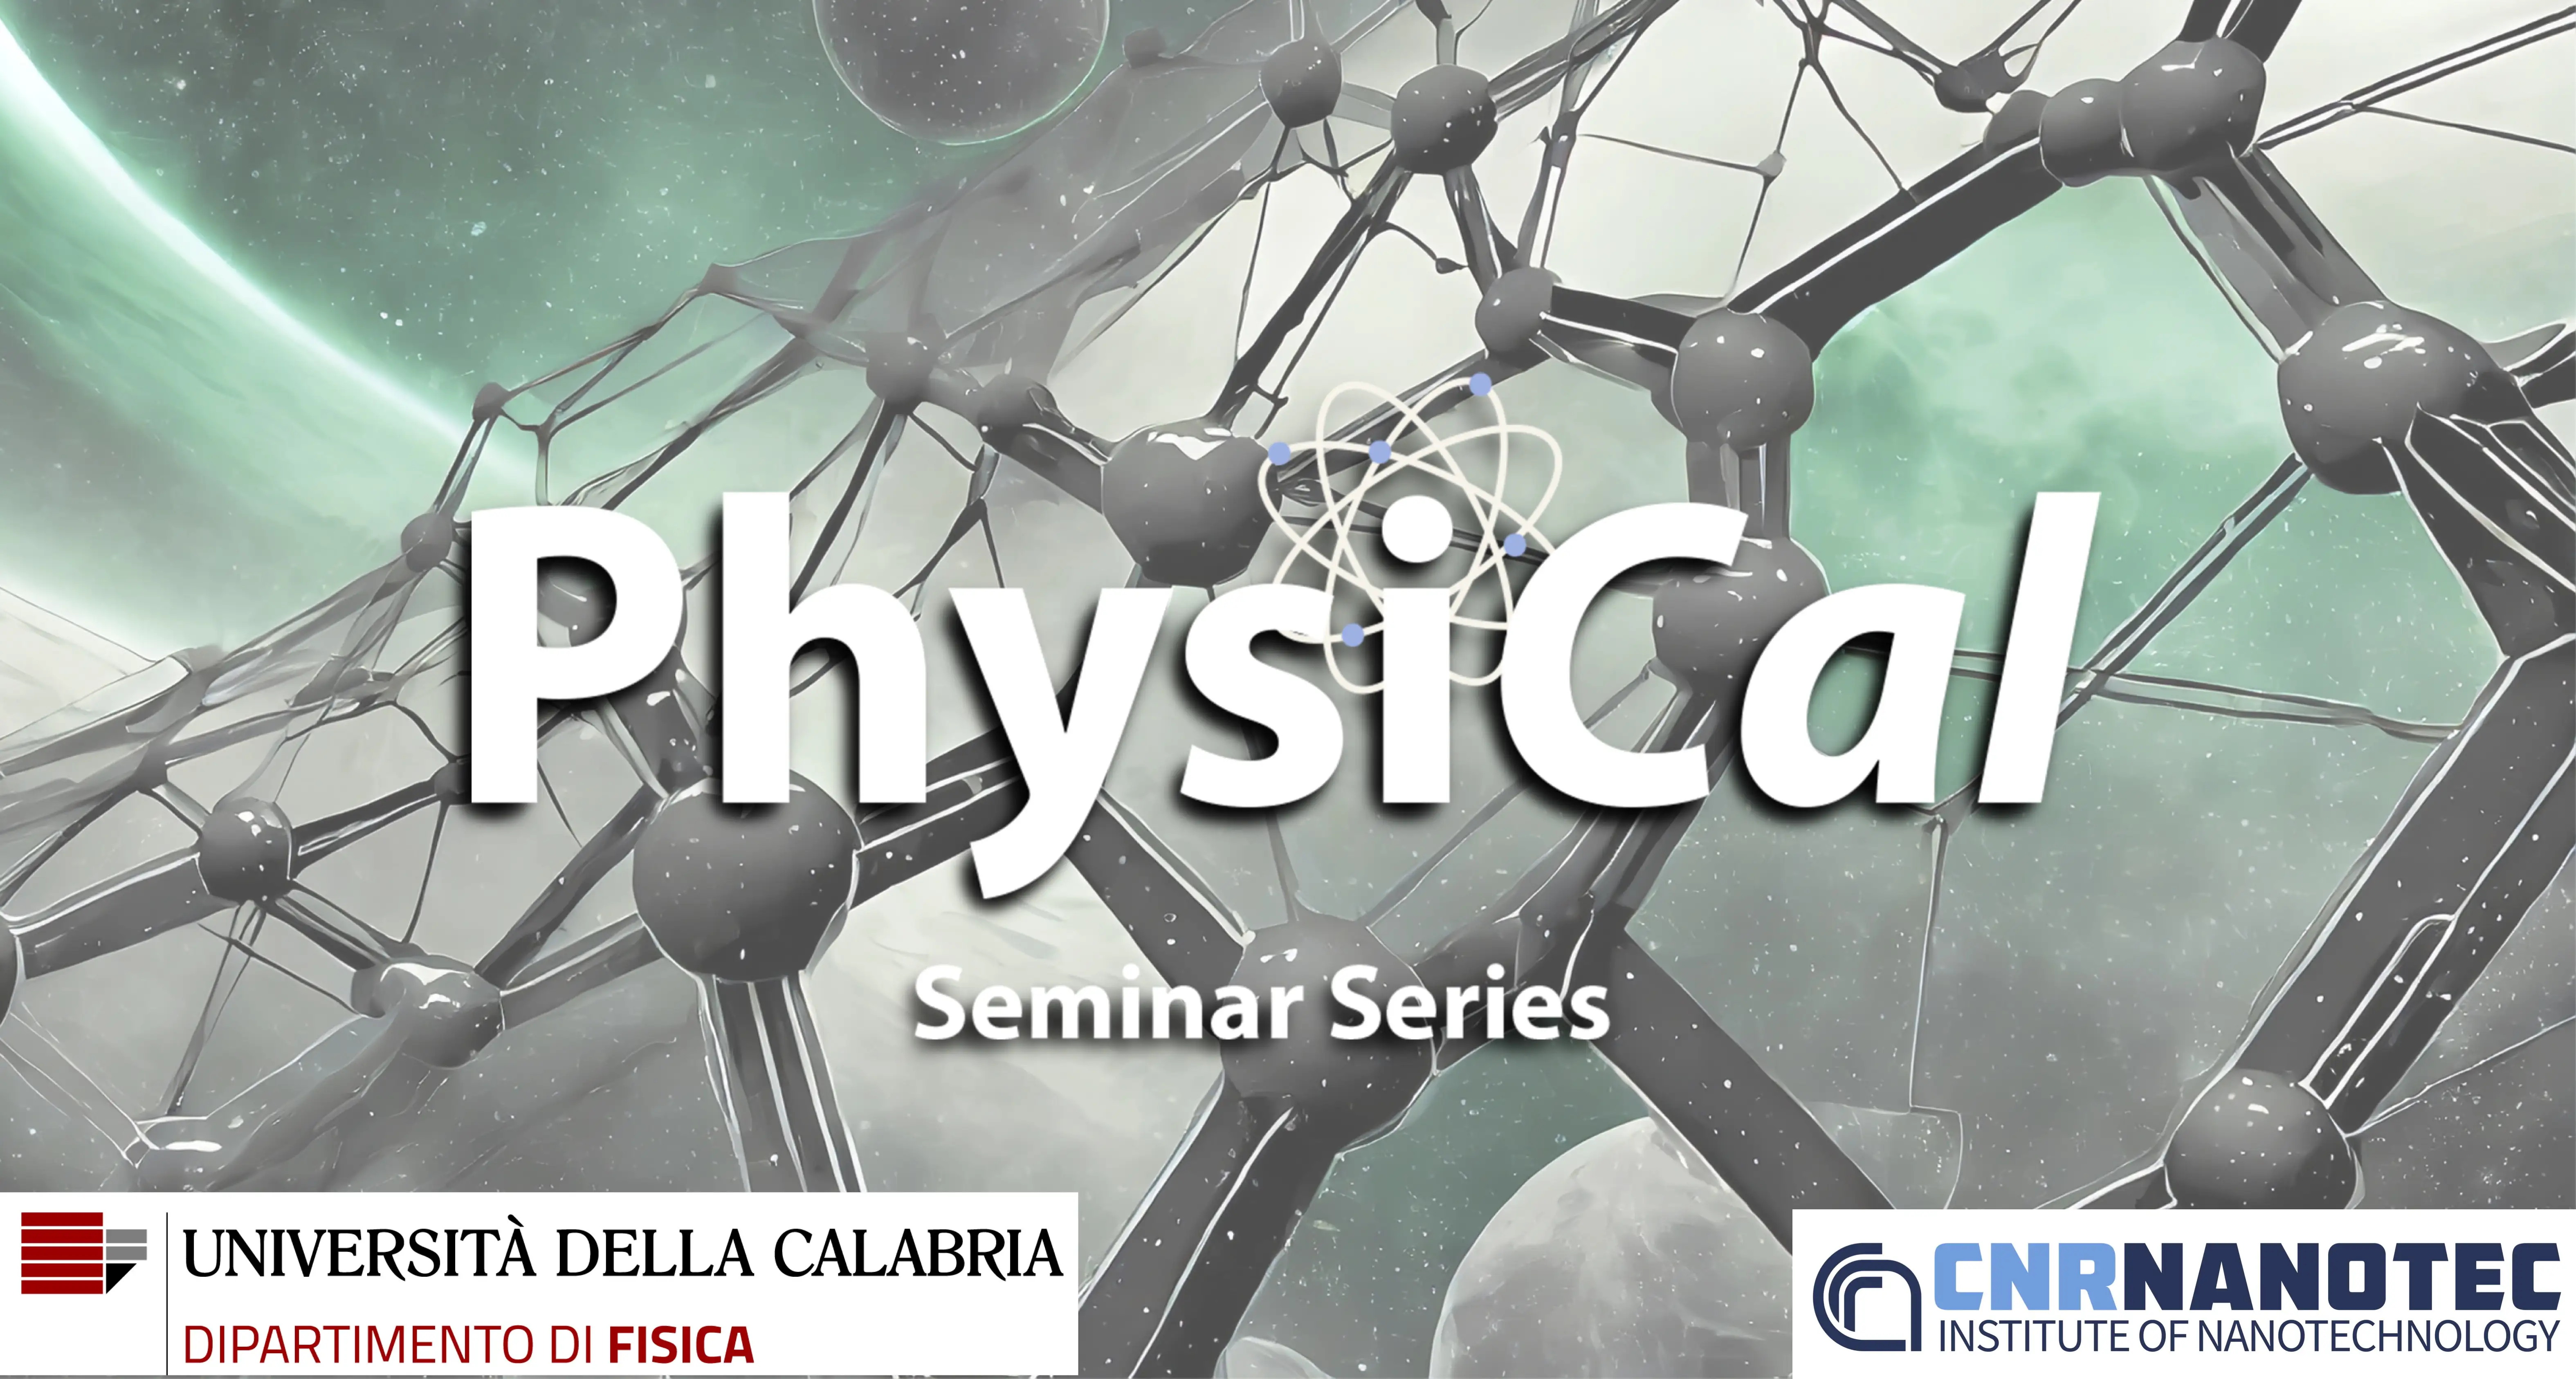 PhysiCal Seminar Series